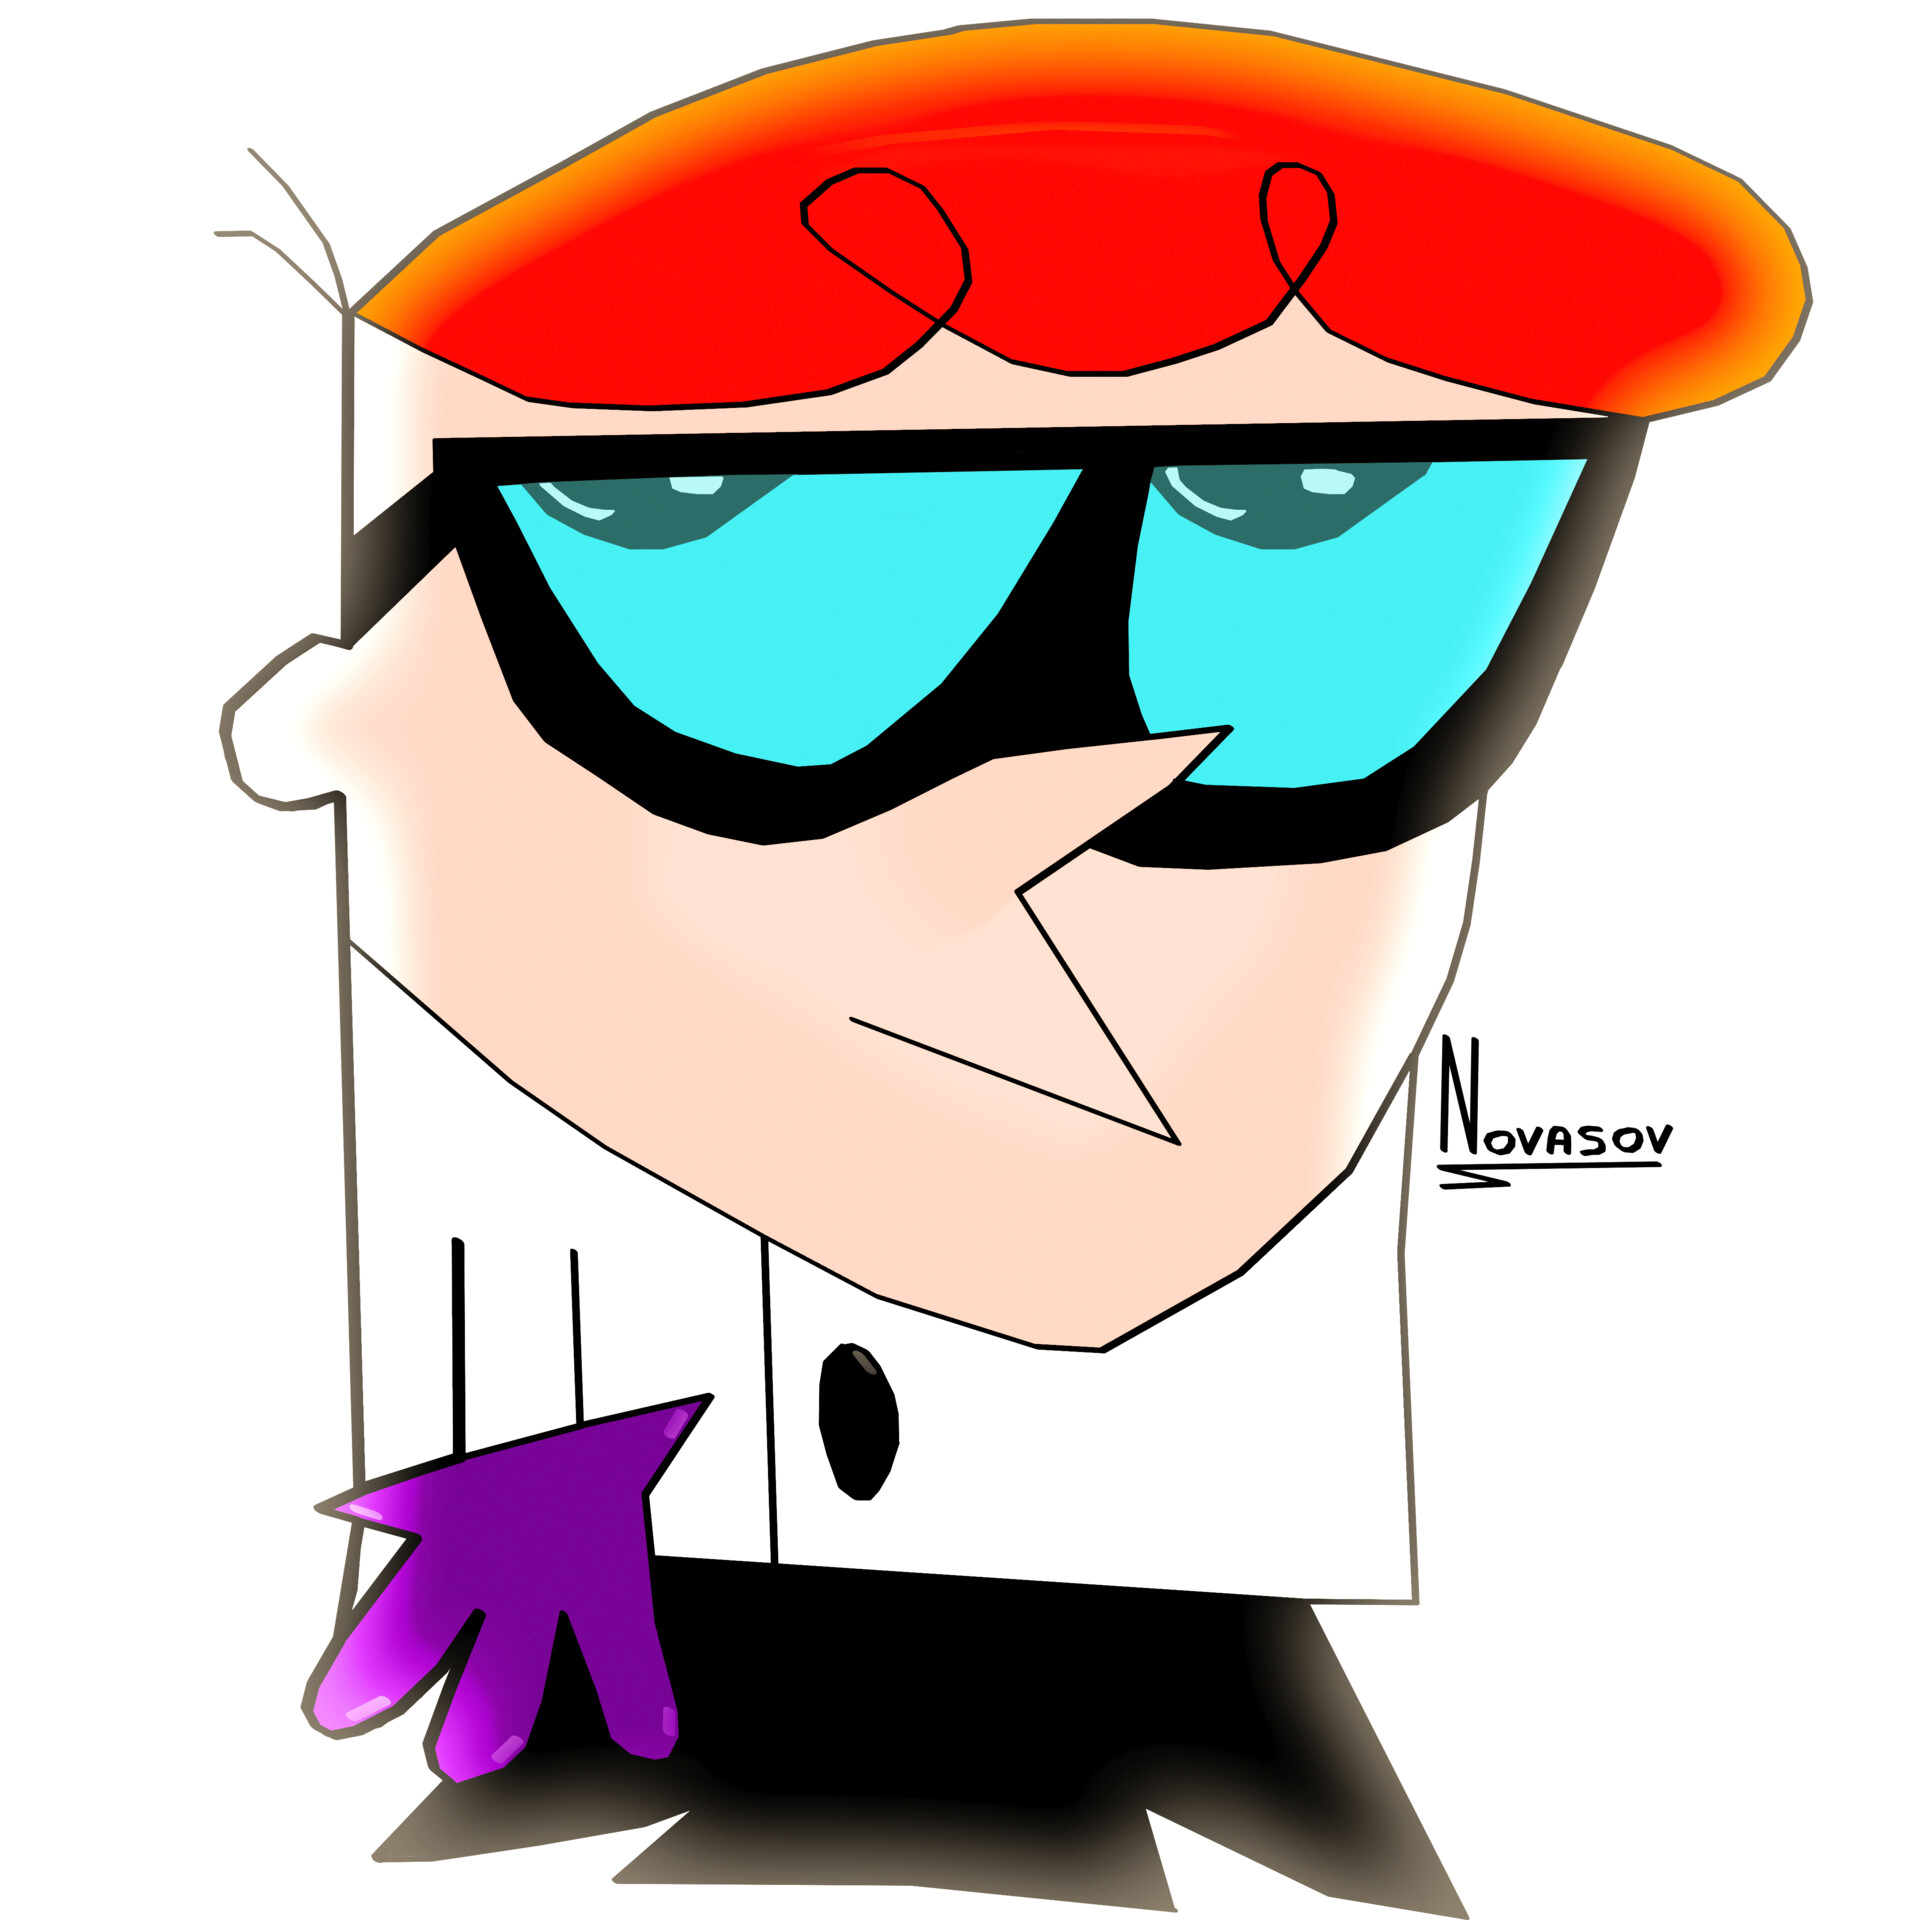 Dexter from Dexter's Laboratory.